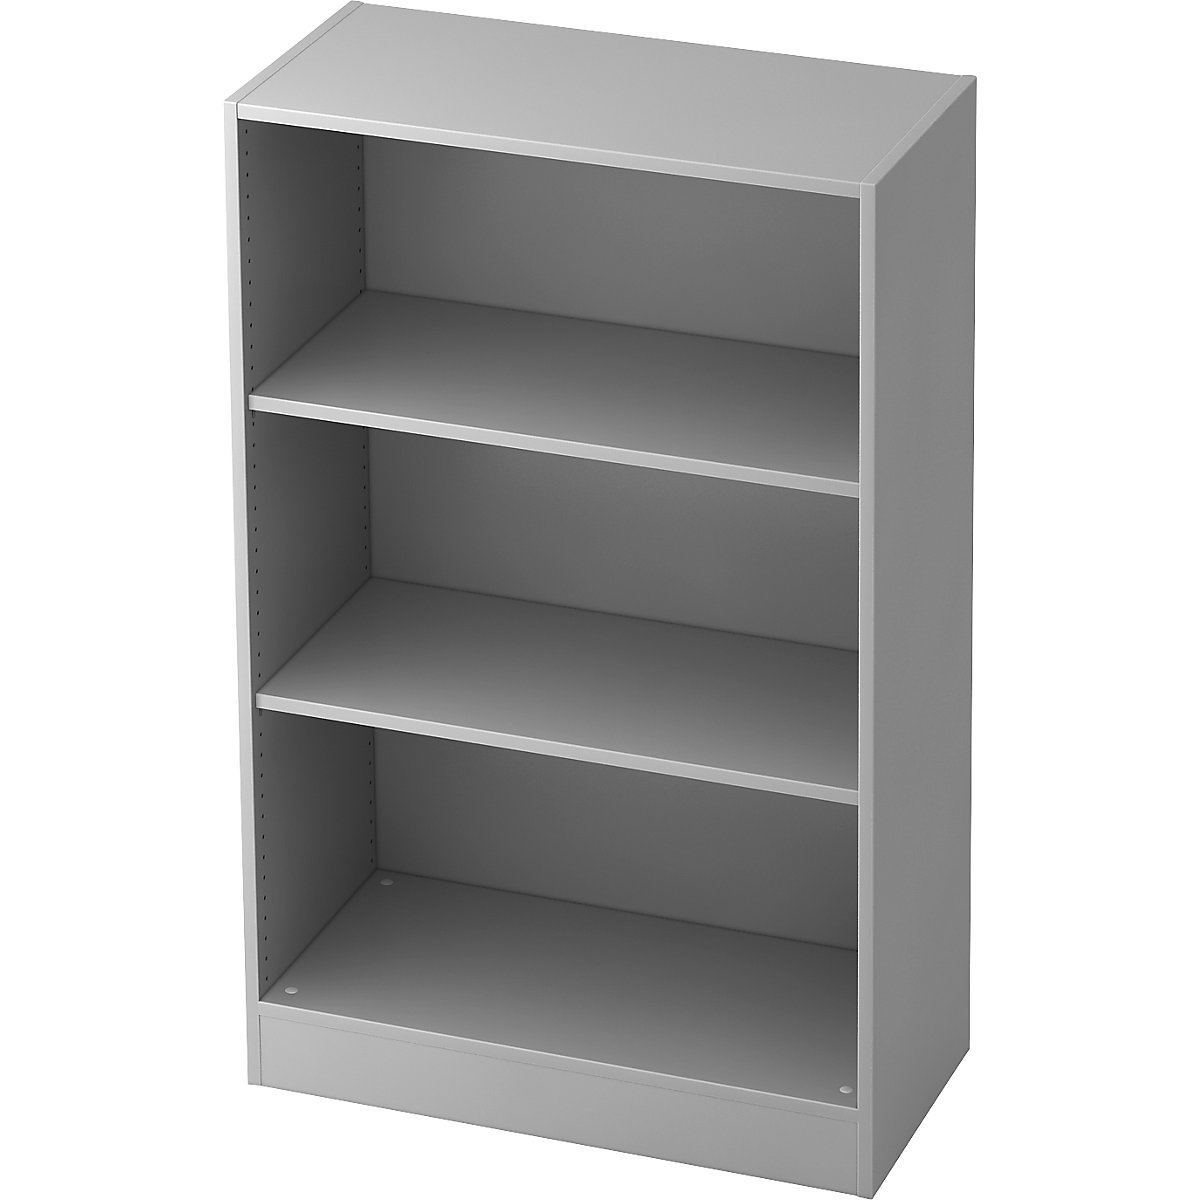 Shelf unit